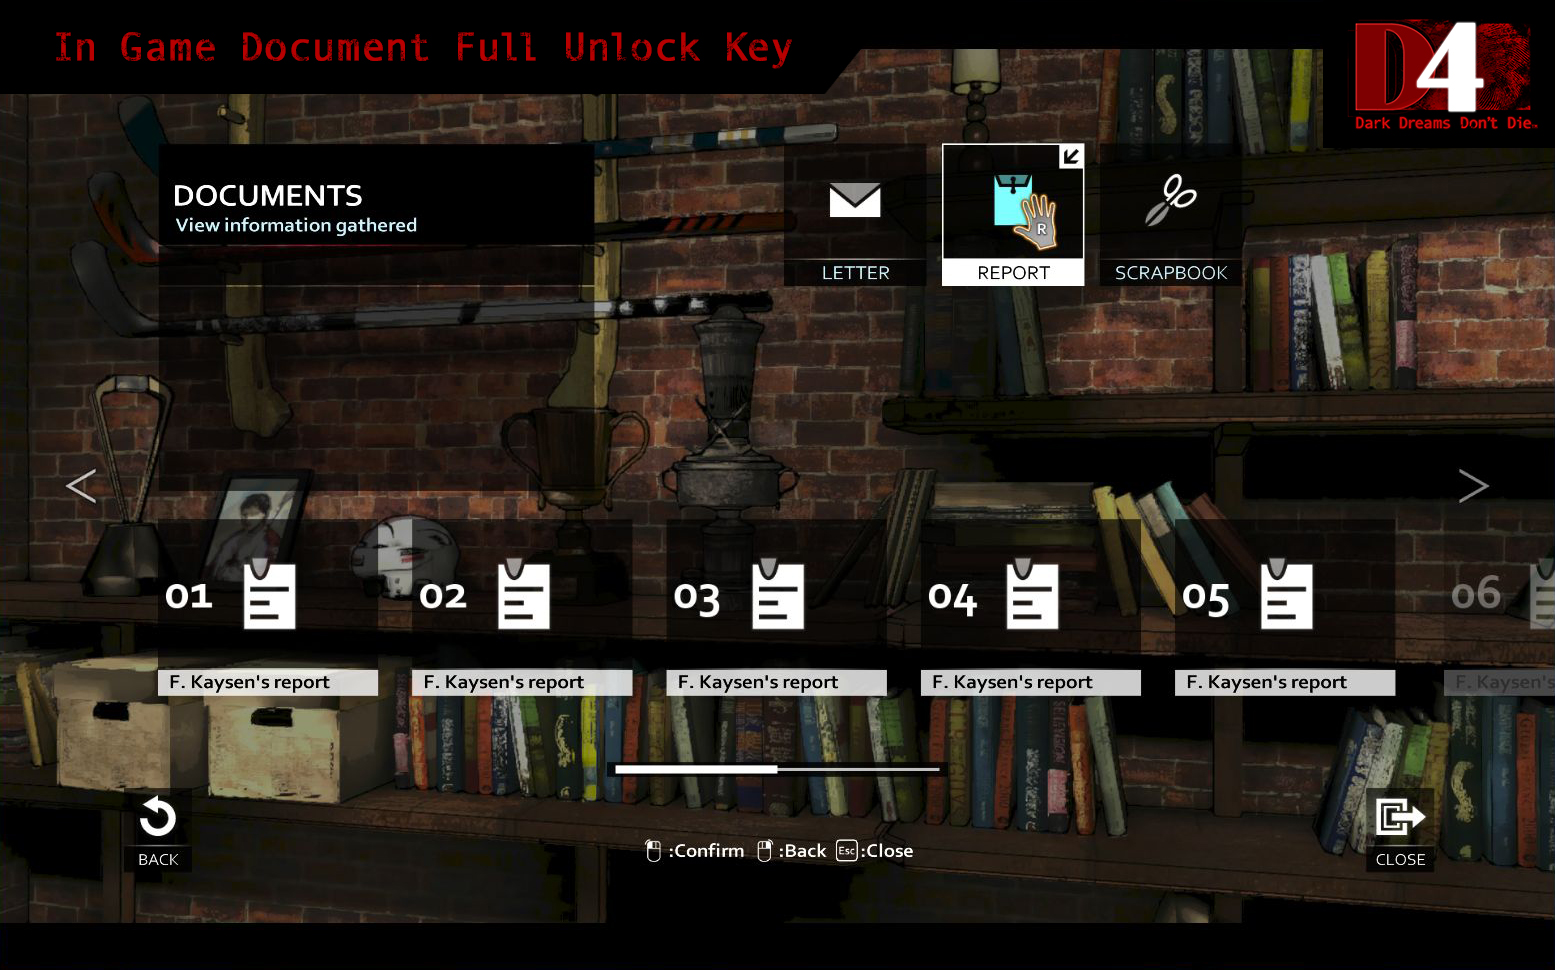 D4: In Game Document Full Unlock Key Featured Screenshot #1